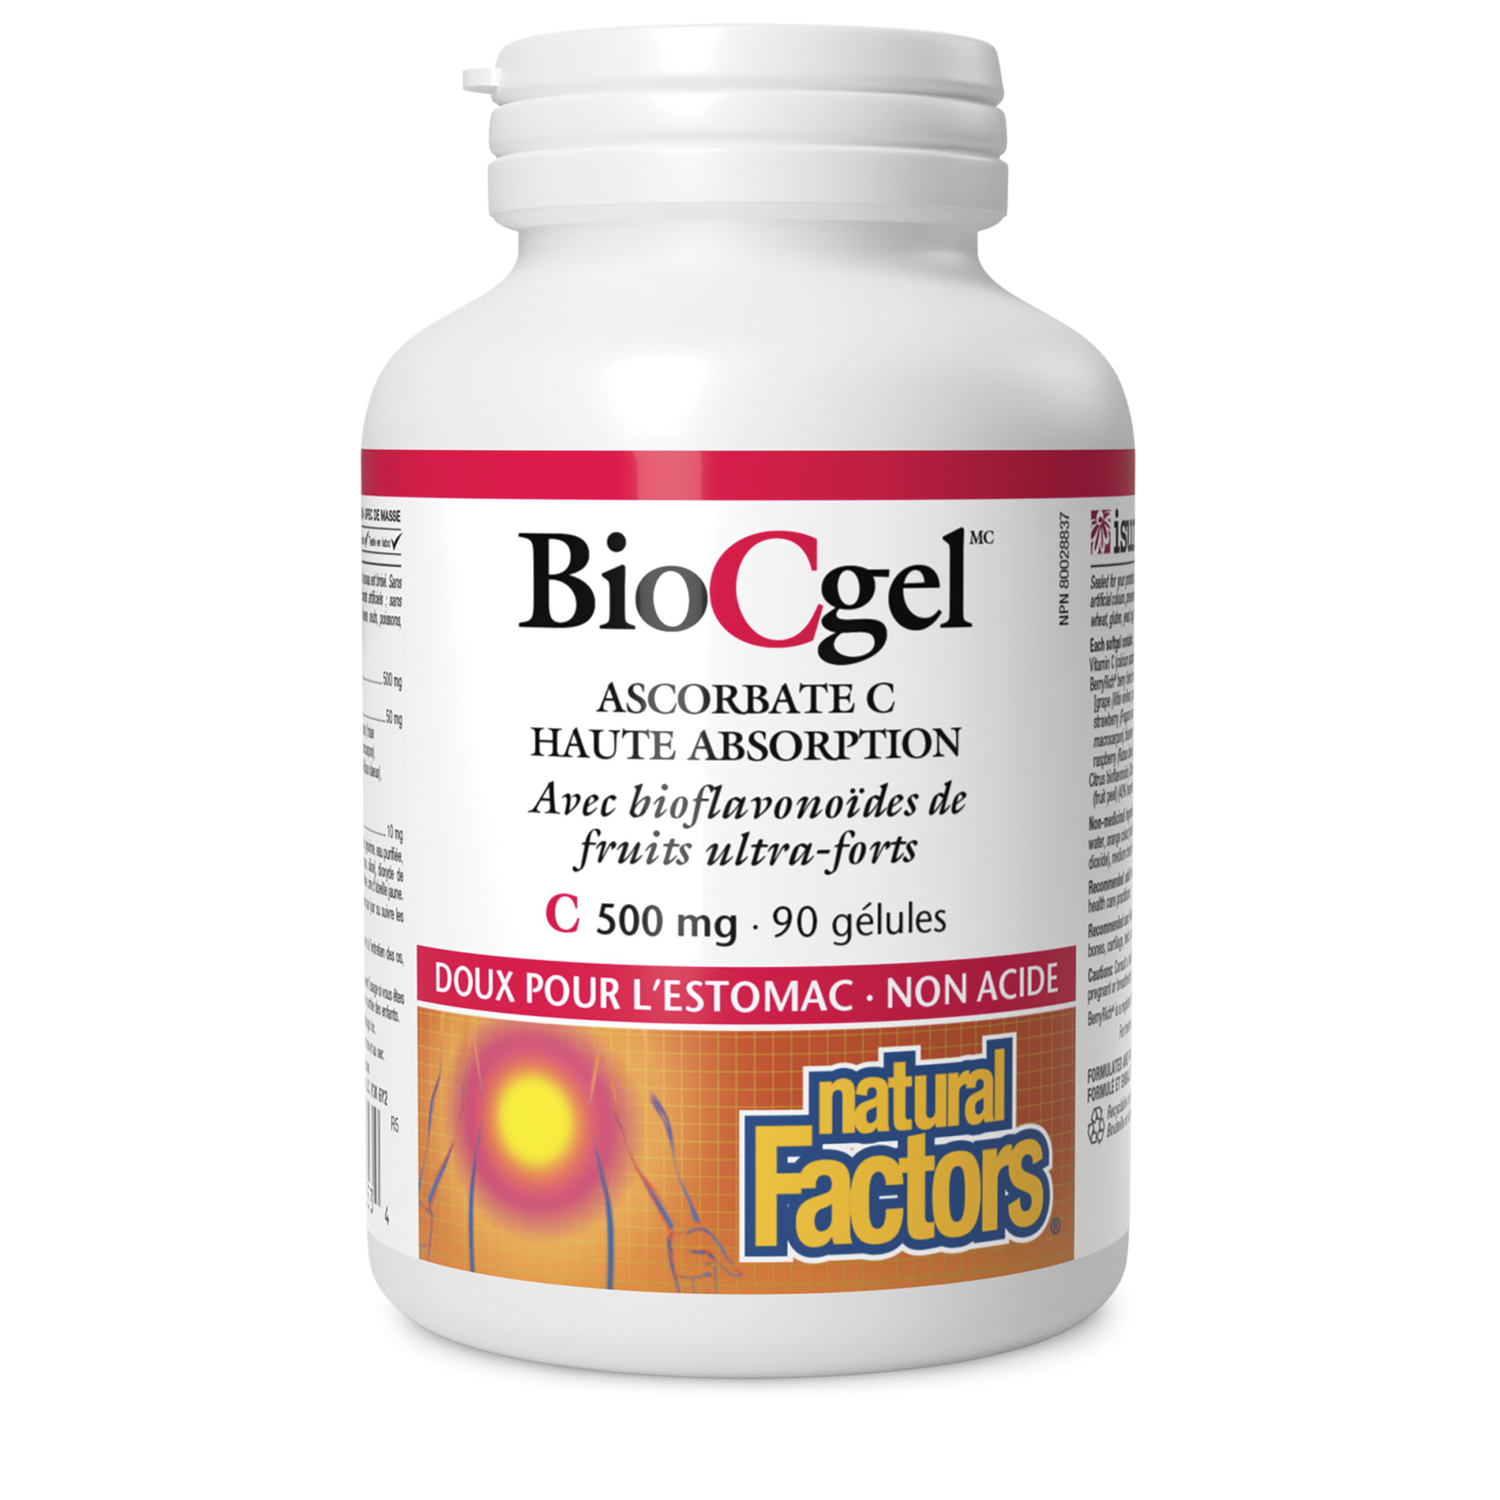 BioCgel Ascorbate C Haute absorption 500 mg, Natural Factors|v|image|1353